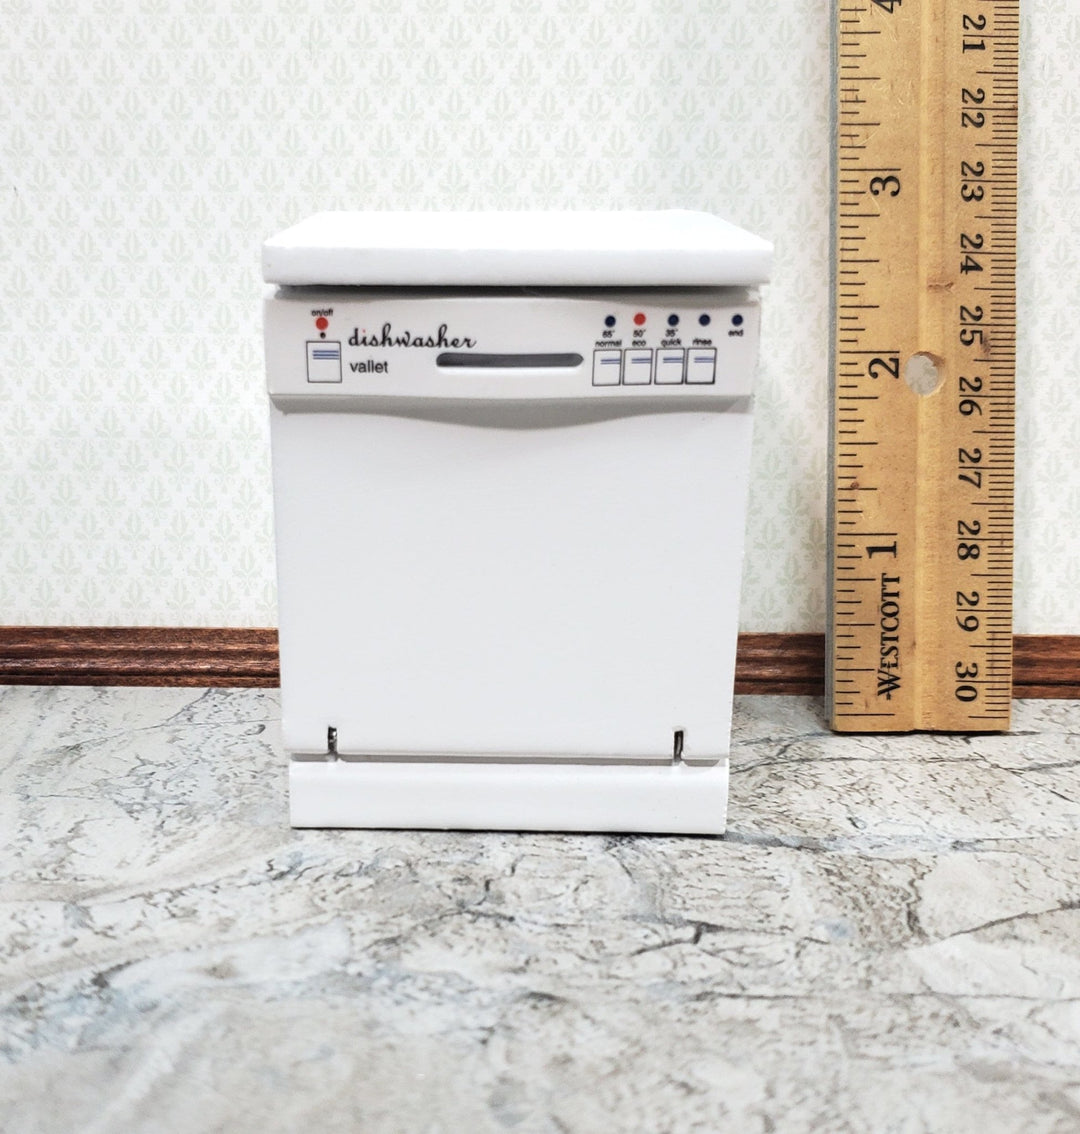 Dollhouse Dishwasher Modern Style Opens White 1:12 Scale Miniature - Miniature Crush